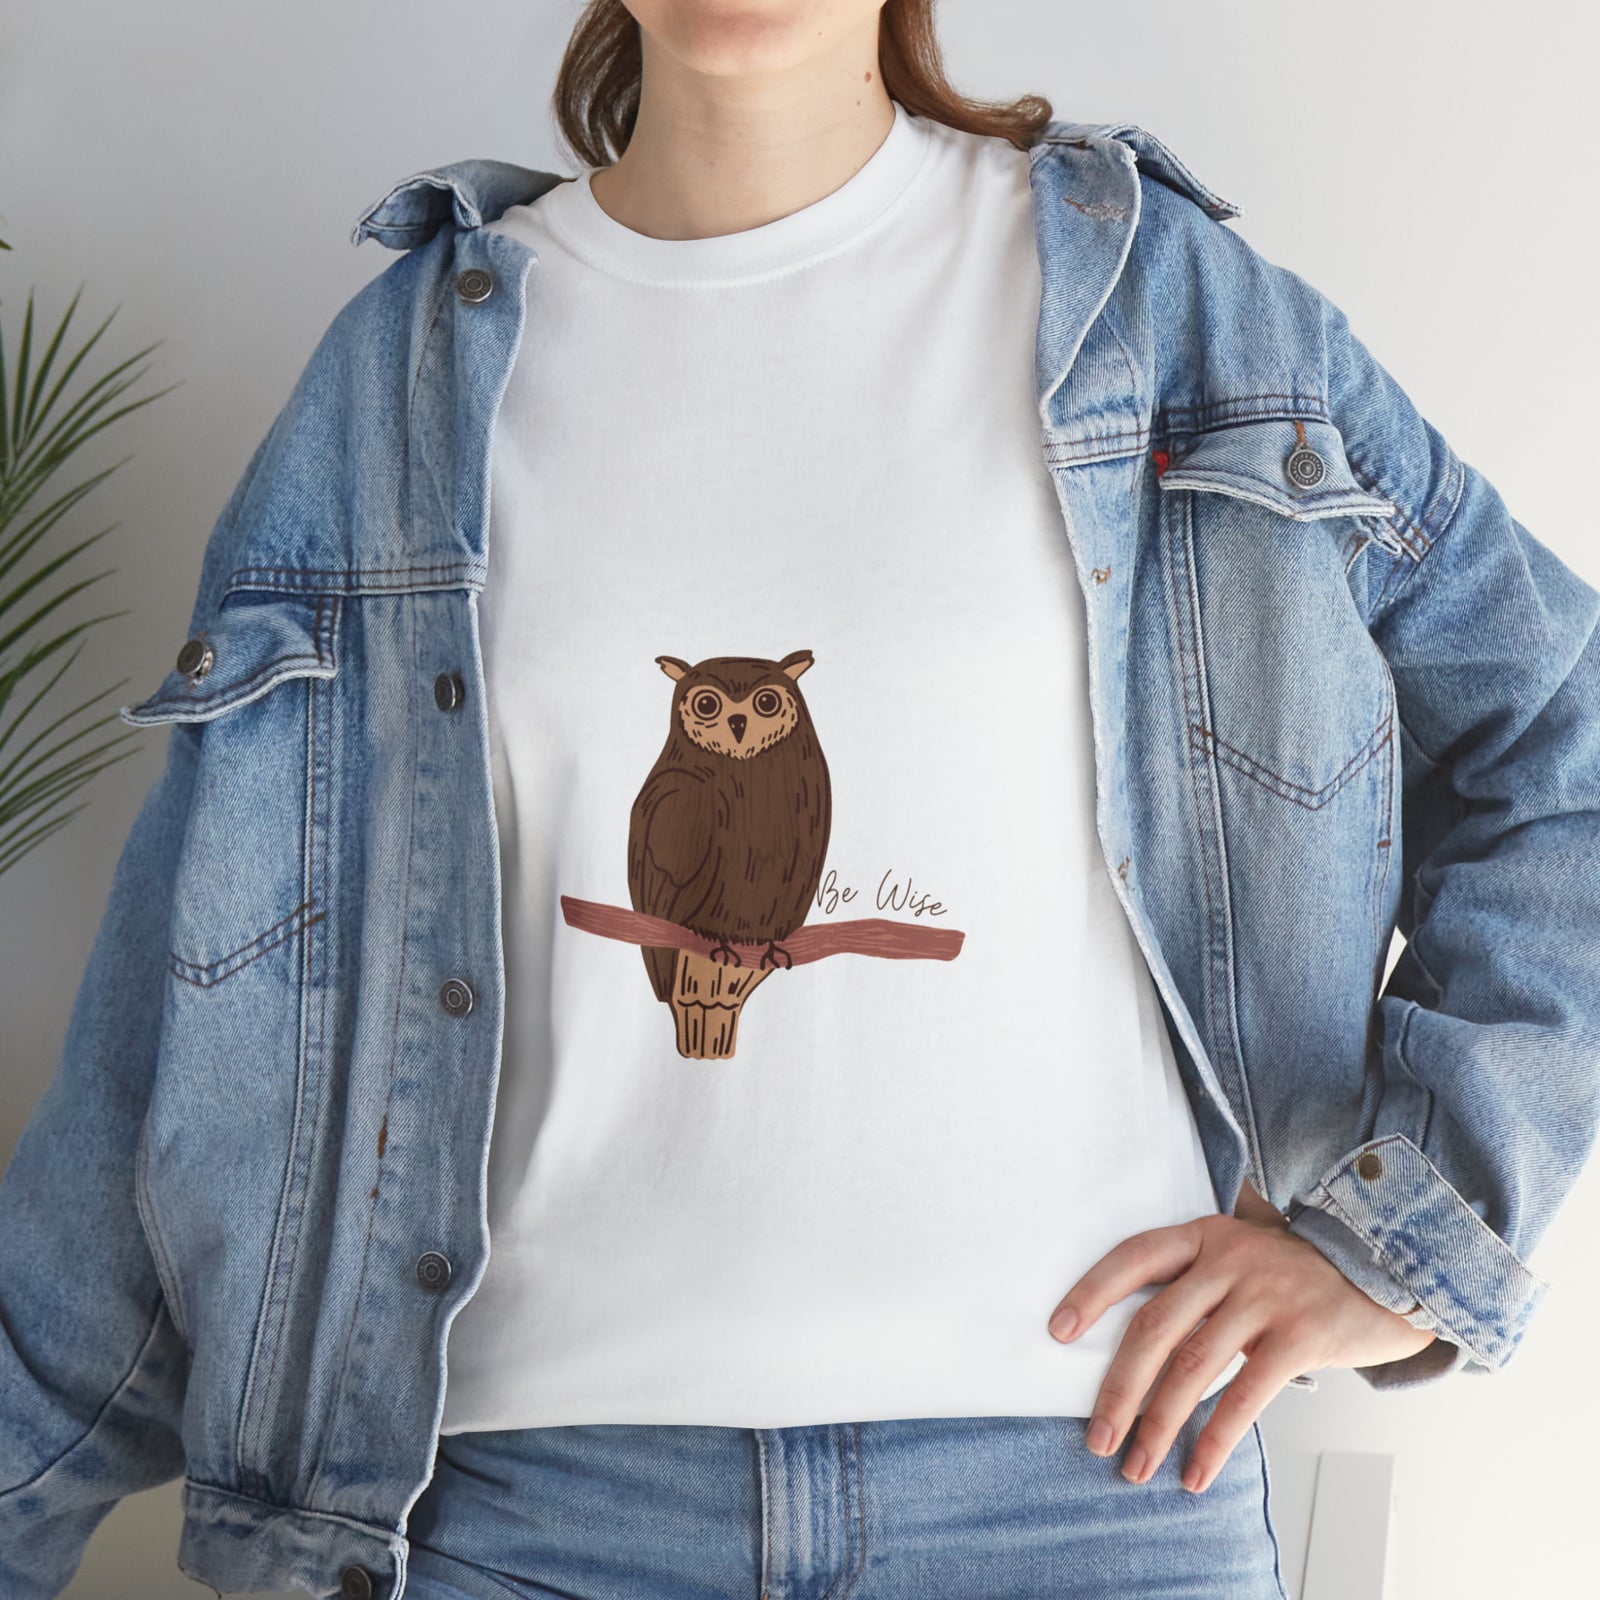 Be Wise Owl Unisex Cotton Tee